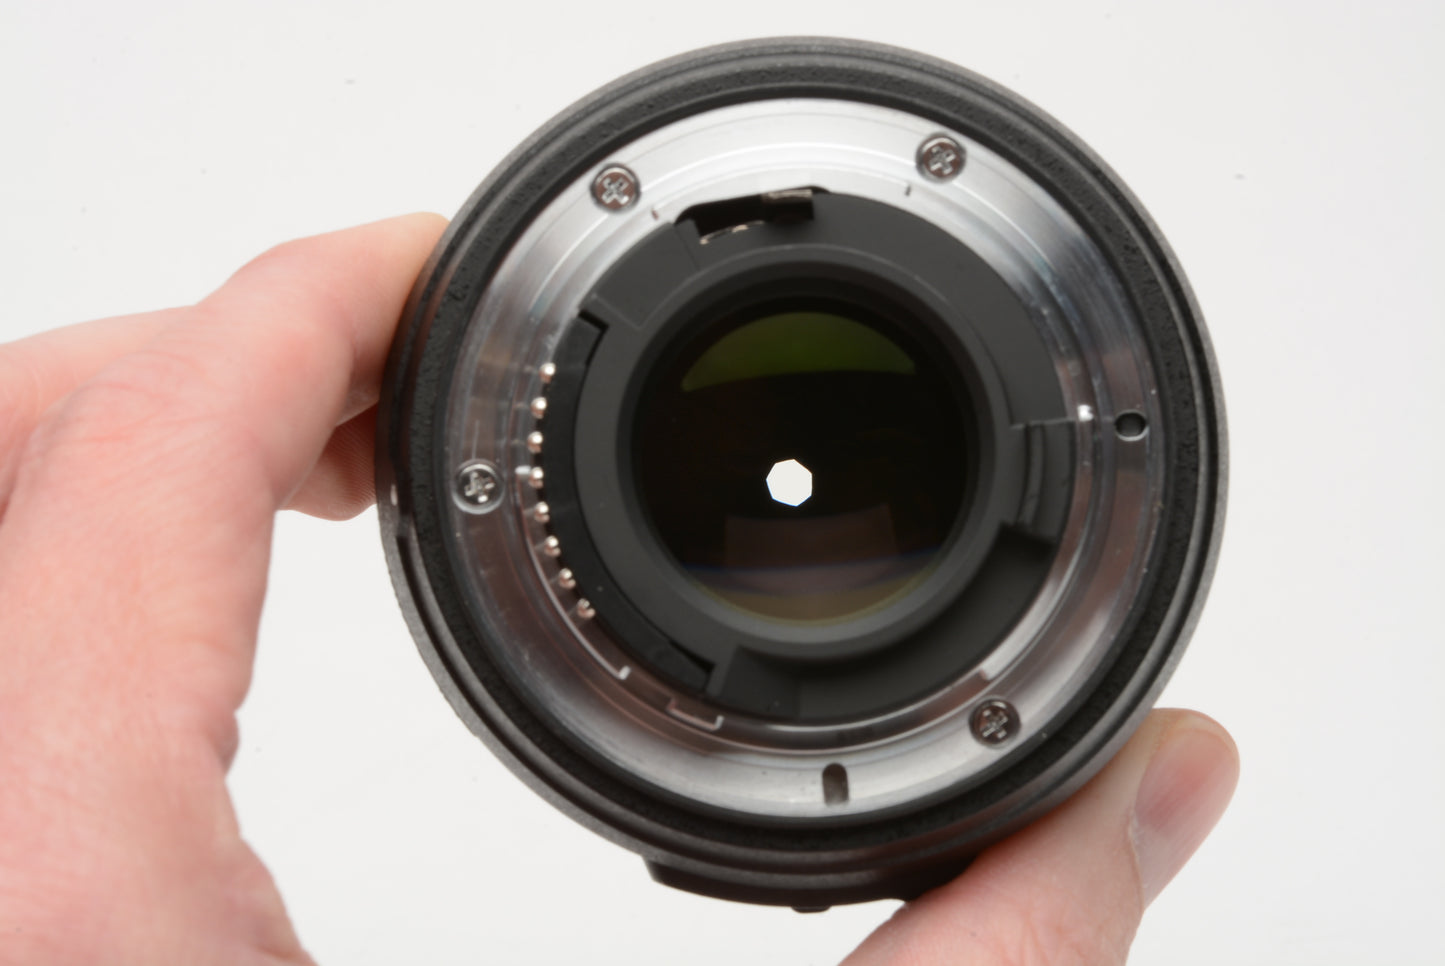 Pentax 67 SMC Takumar 150mm f2.8 lens for 67 series cameras